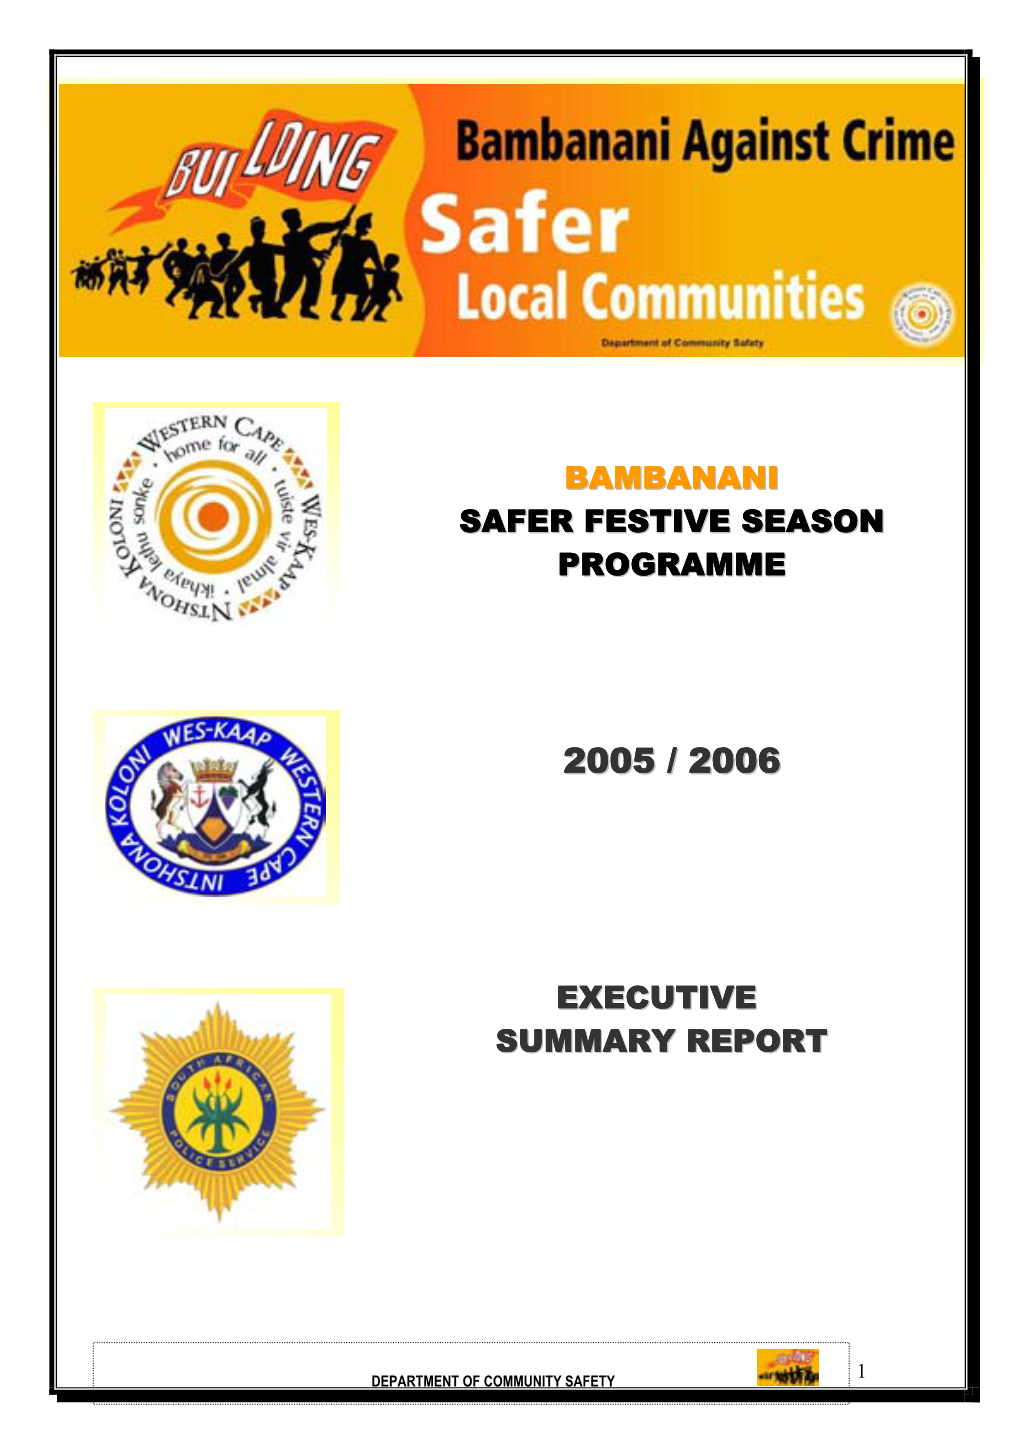 Bambanani Safer Festive Season Programme Executive Summary Report